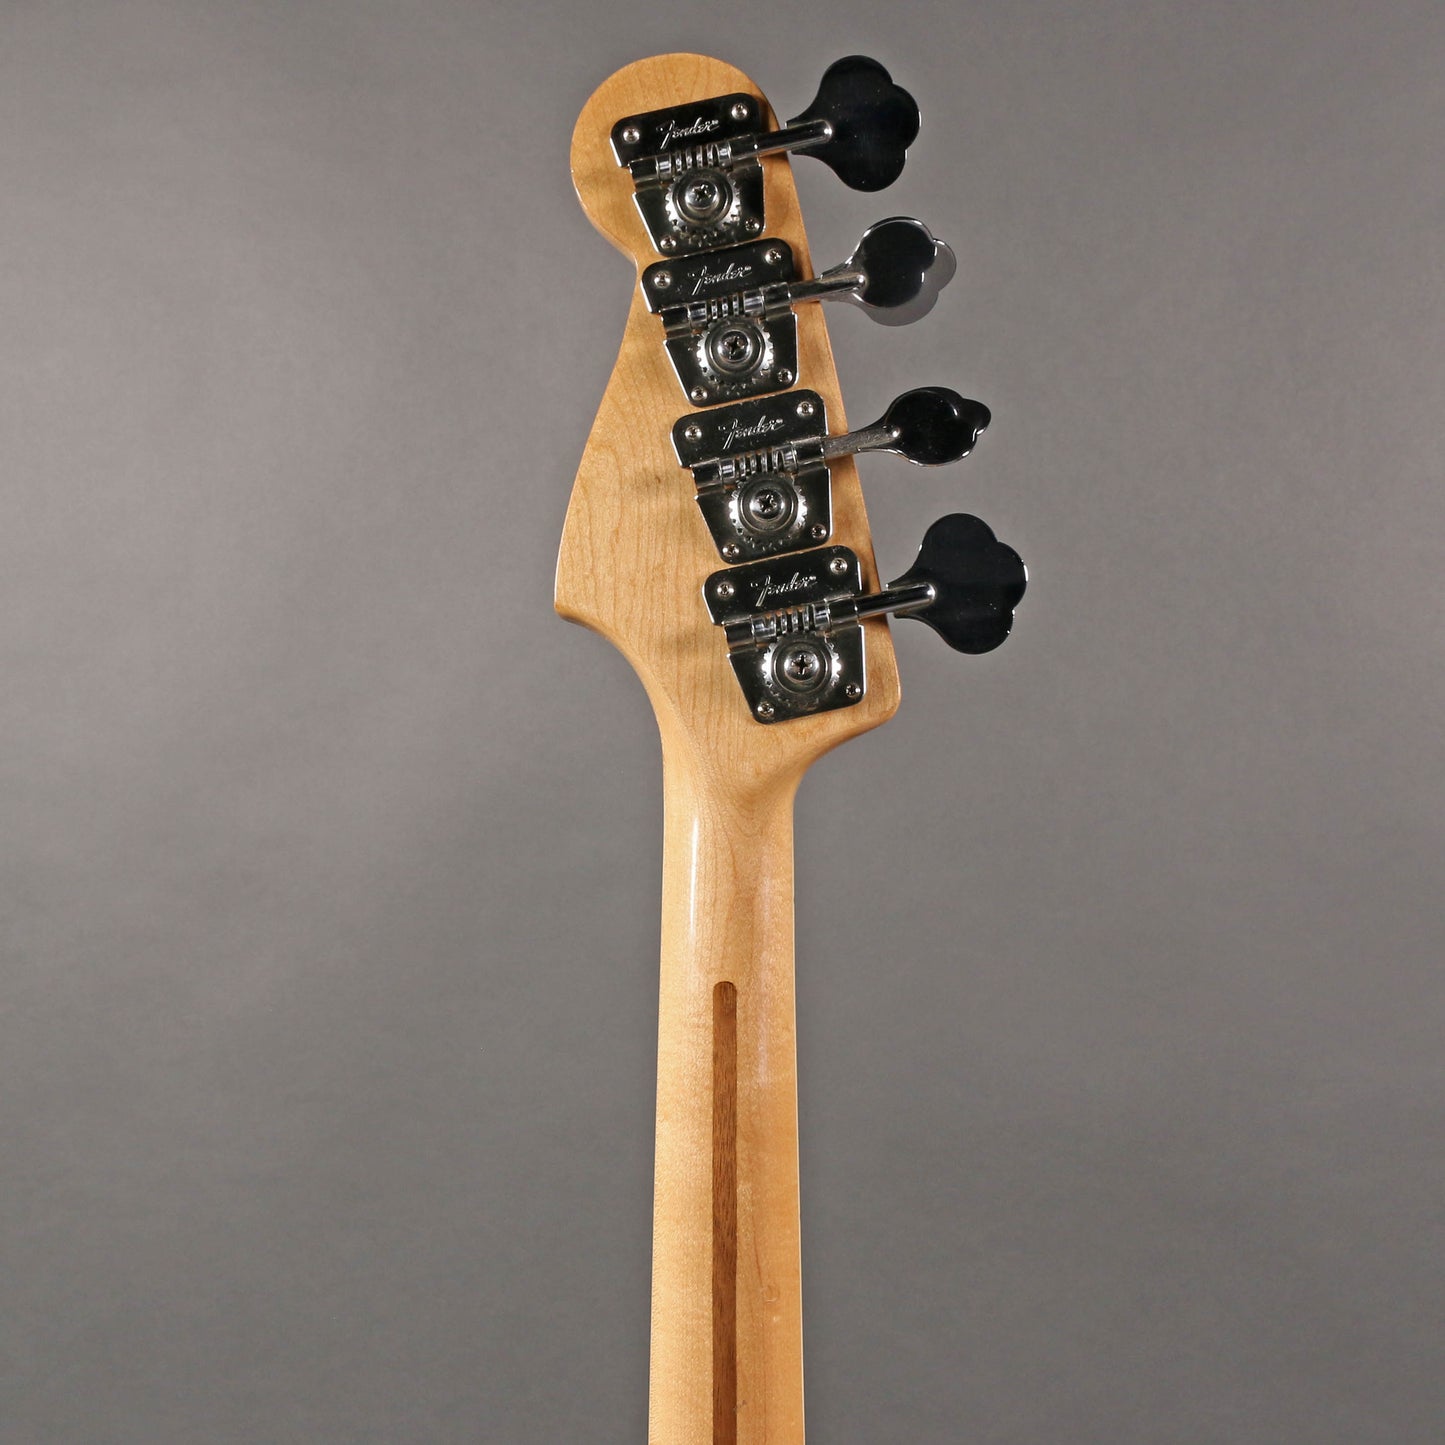 1977 Fender Jazz Bass